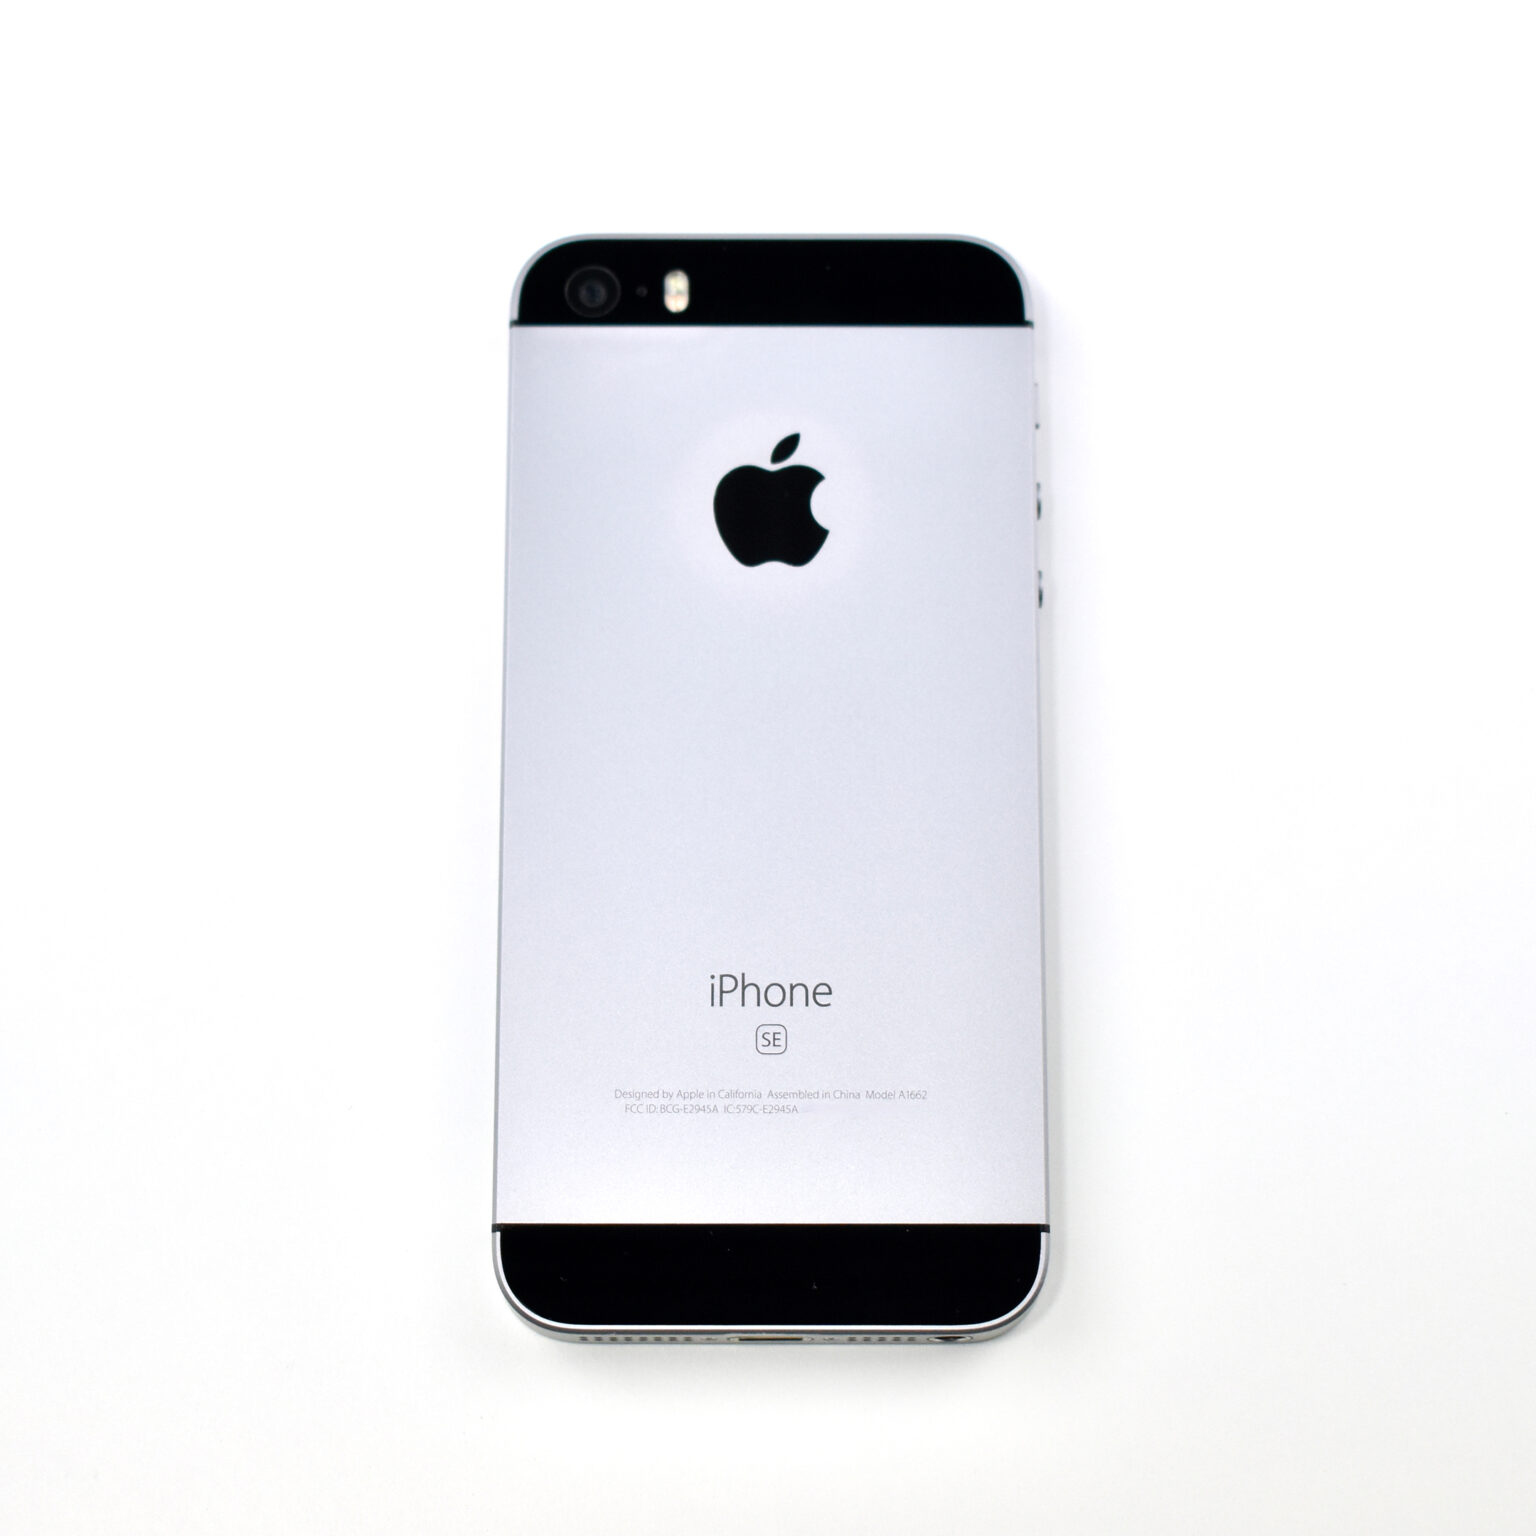 iPhone SE (original, Space Gray, 2016) – mattjfuller.com